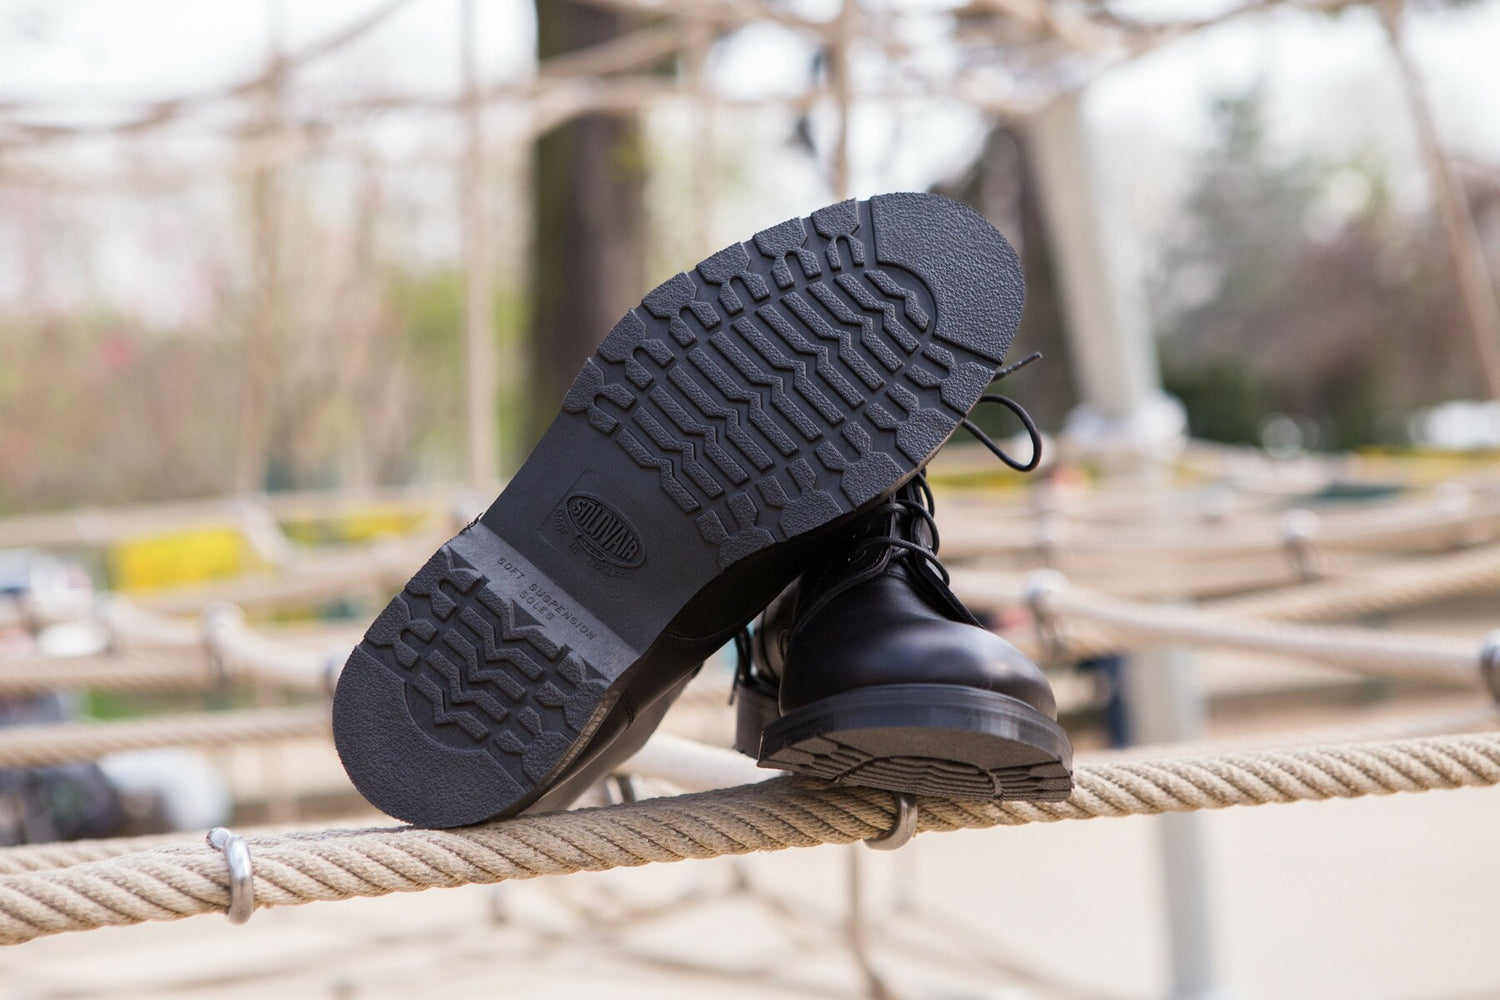 Solovair - Boots premium 951 en cuir noir cousue goodyear semelle coussin d'air